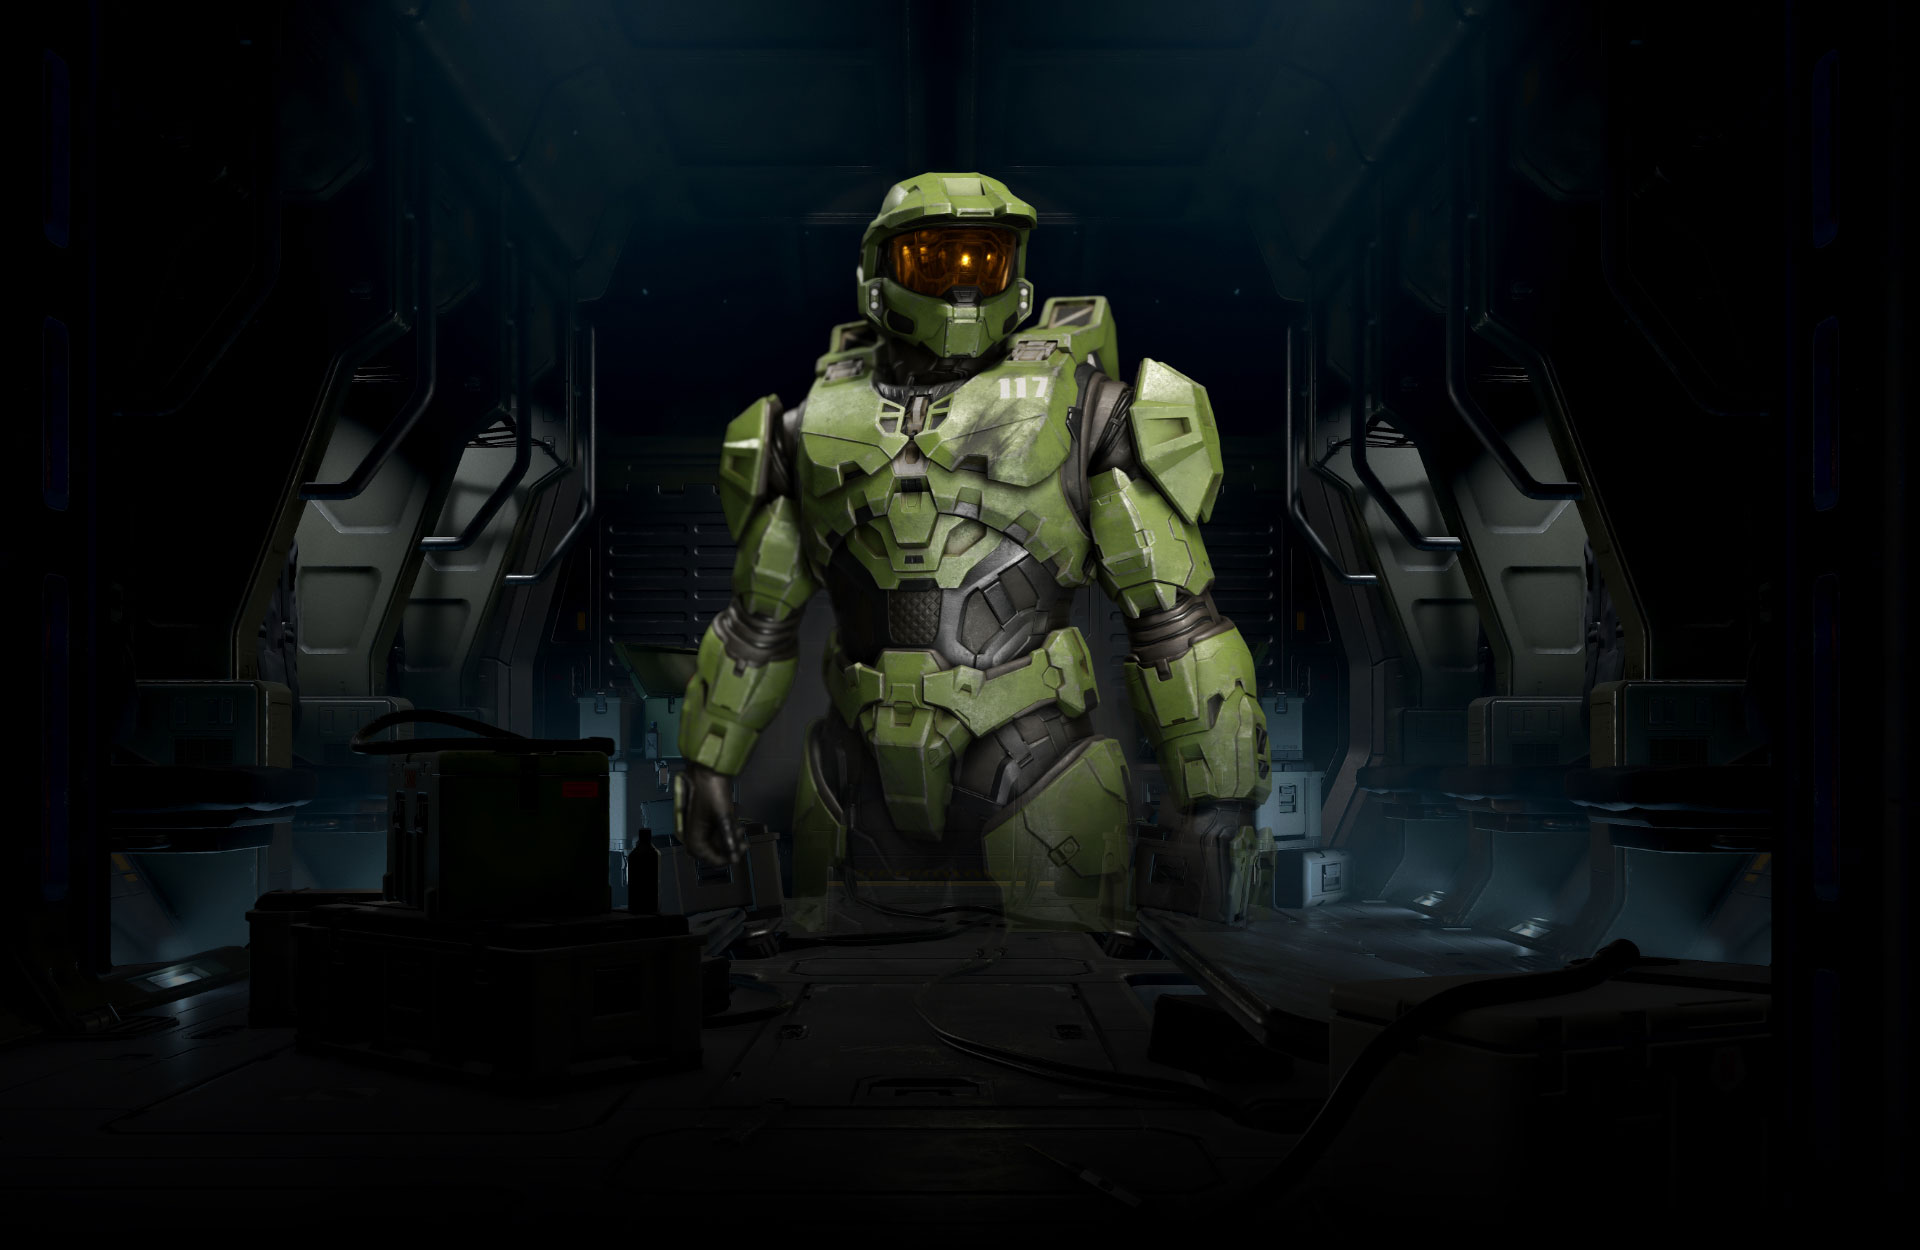 Halo Infinite。士官長站在燈光昏暗的房間裡，他胸前 “117” 下的盔甲正面有點受損。